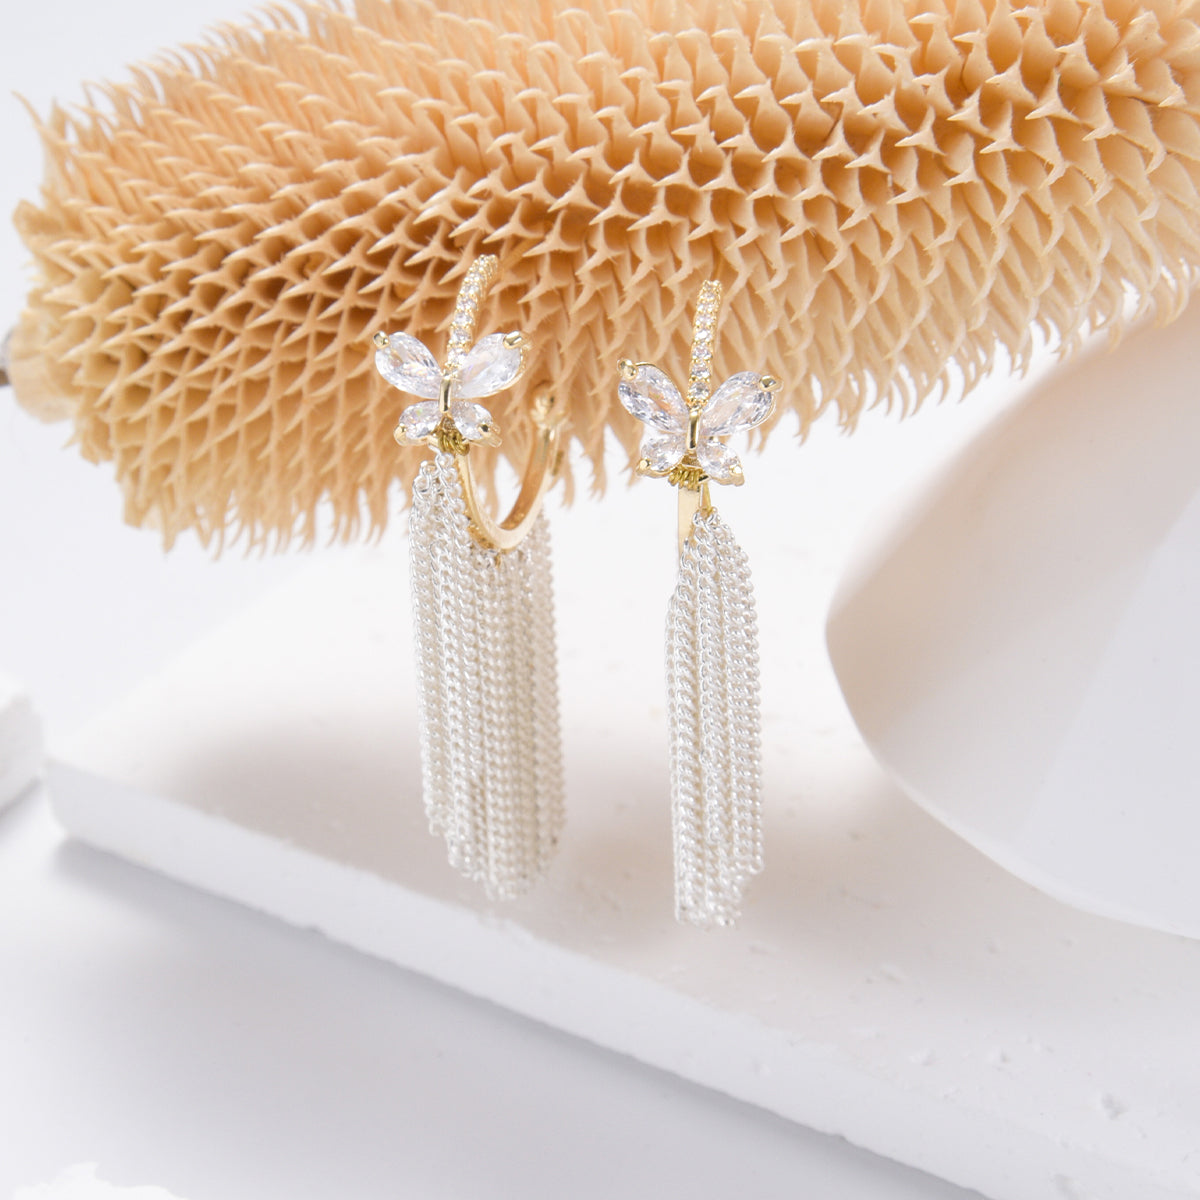 Classic golden butterfly earrings with silver tassels